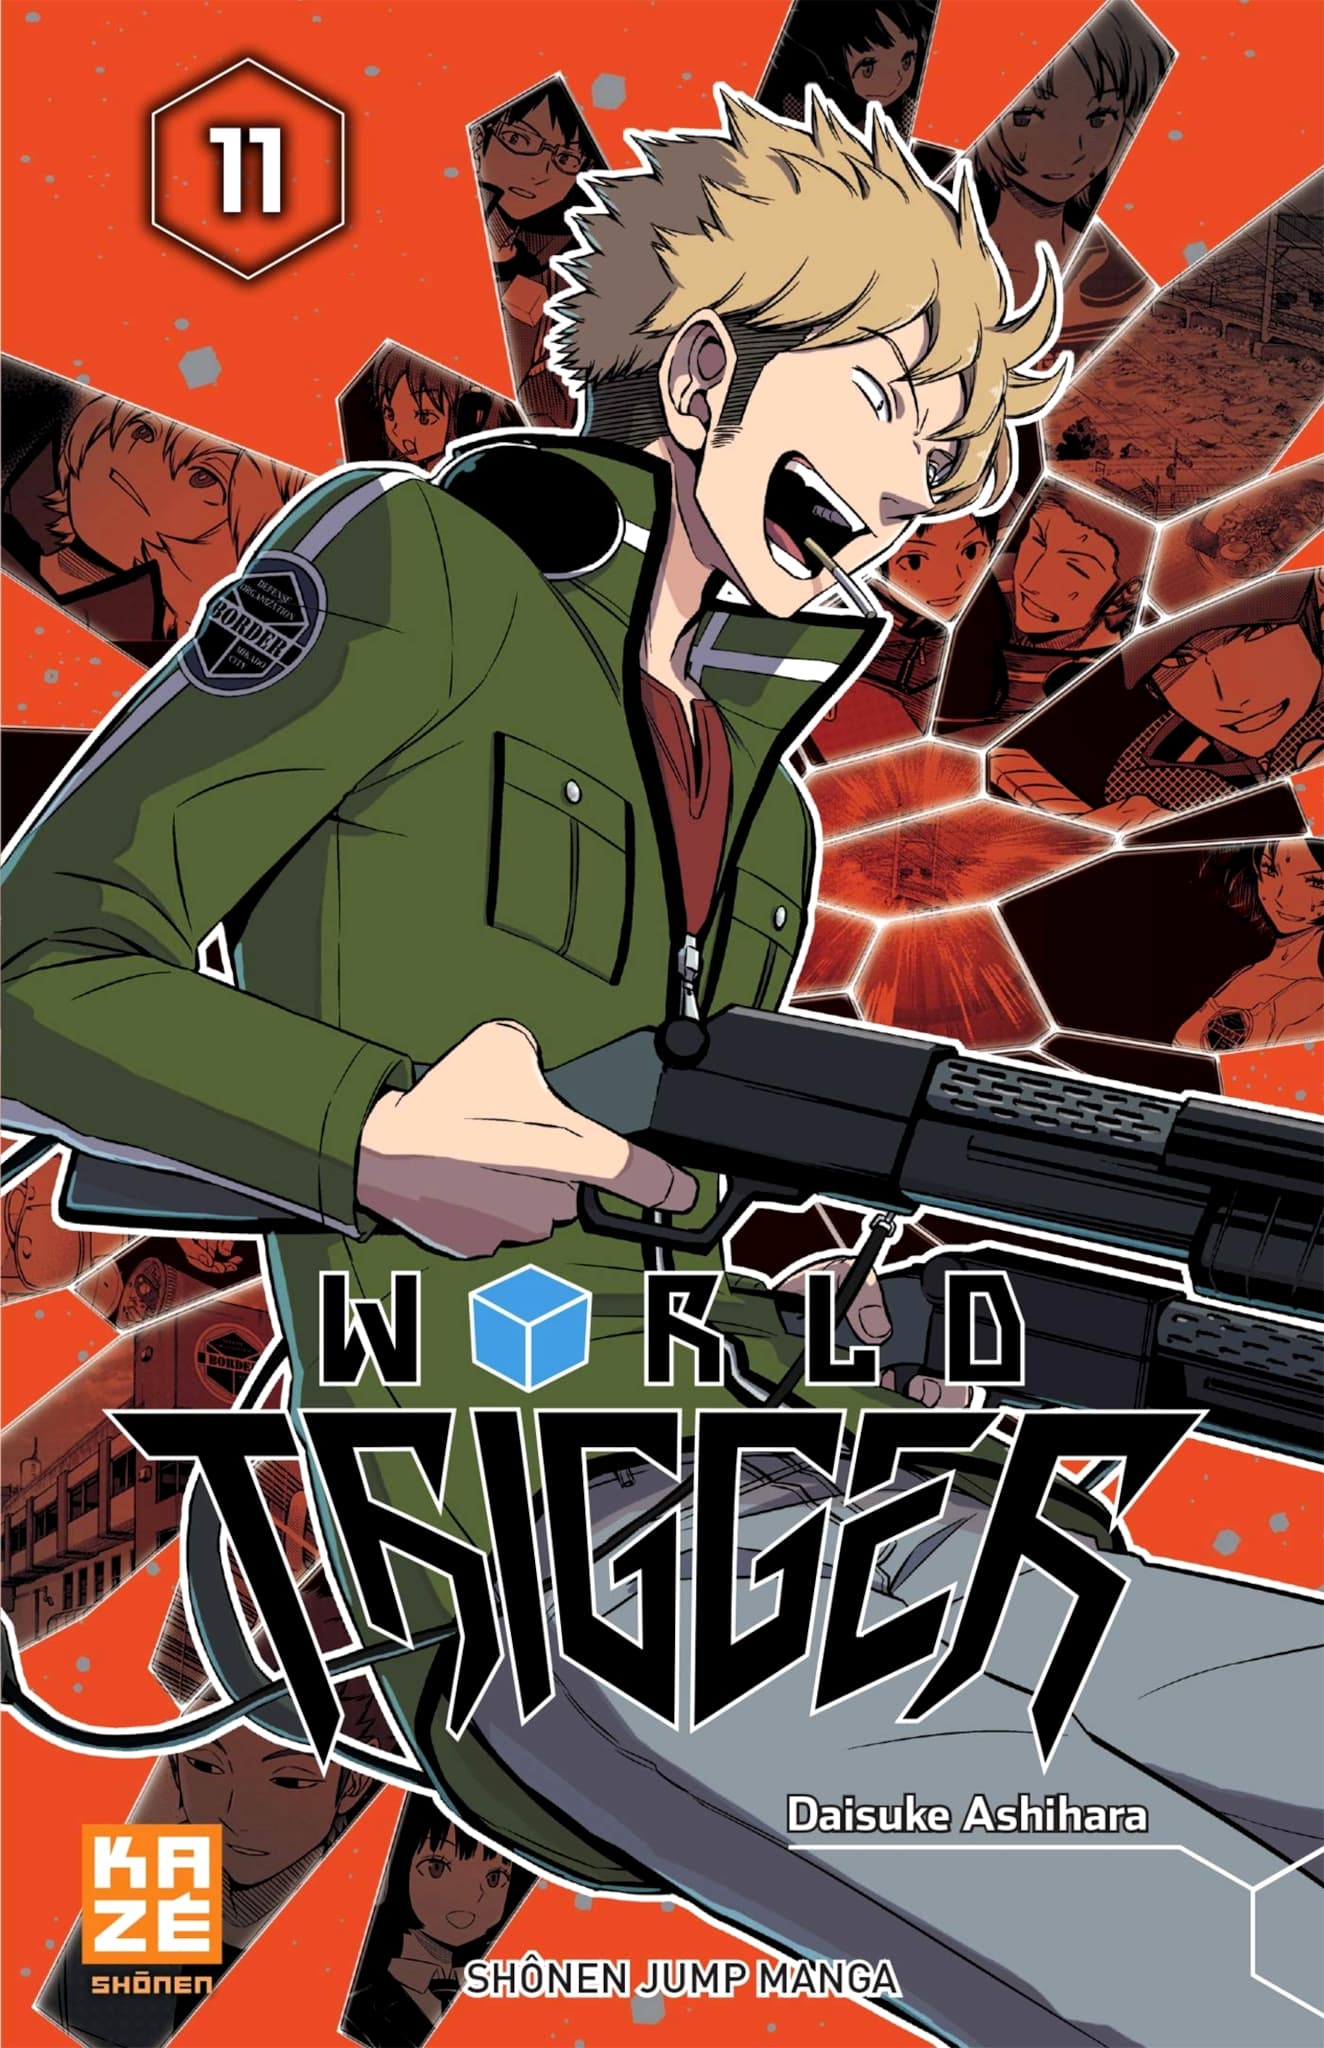 Tome 11 du manga World Trigger